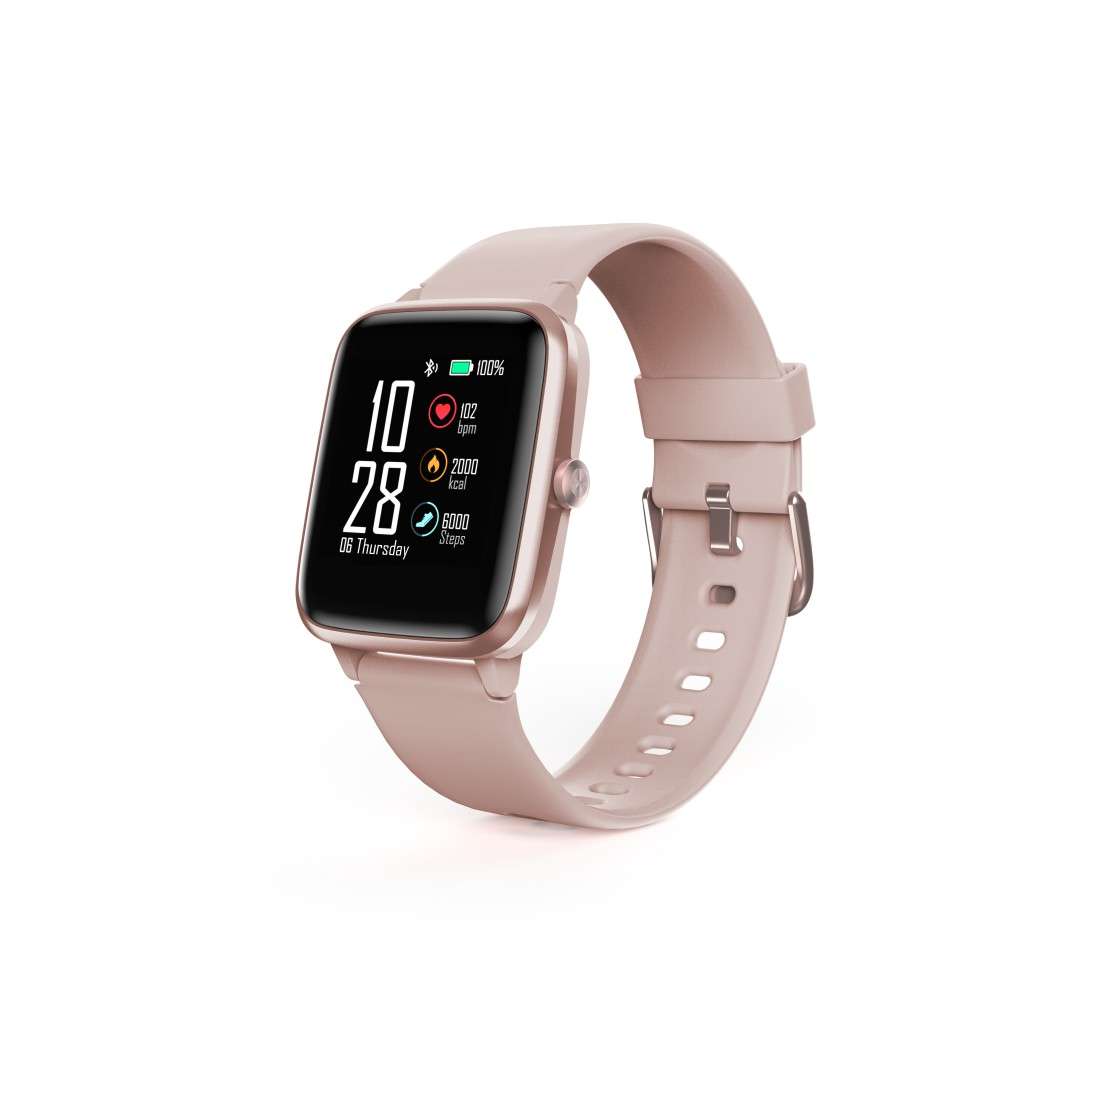 HAMA Smartwatch Fit Watch 5910, GPS, wasserdicht, Herzfrequenz, Kalorien, Rosé